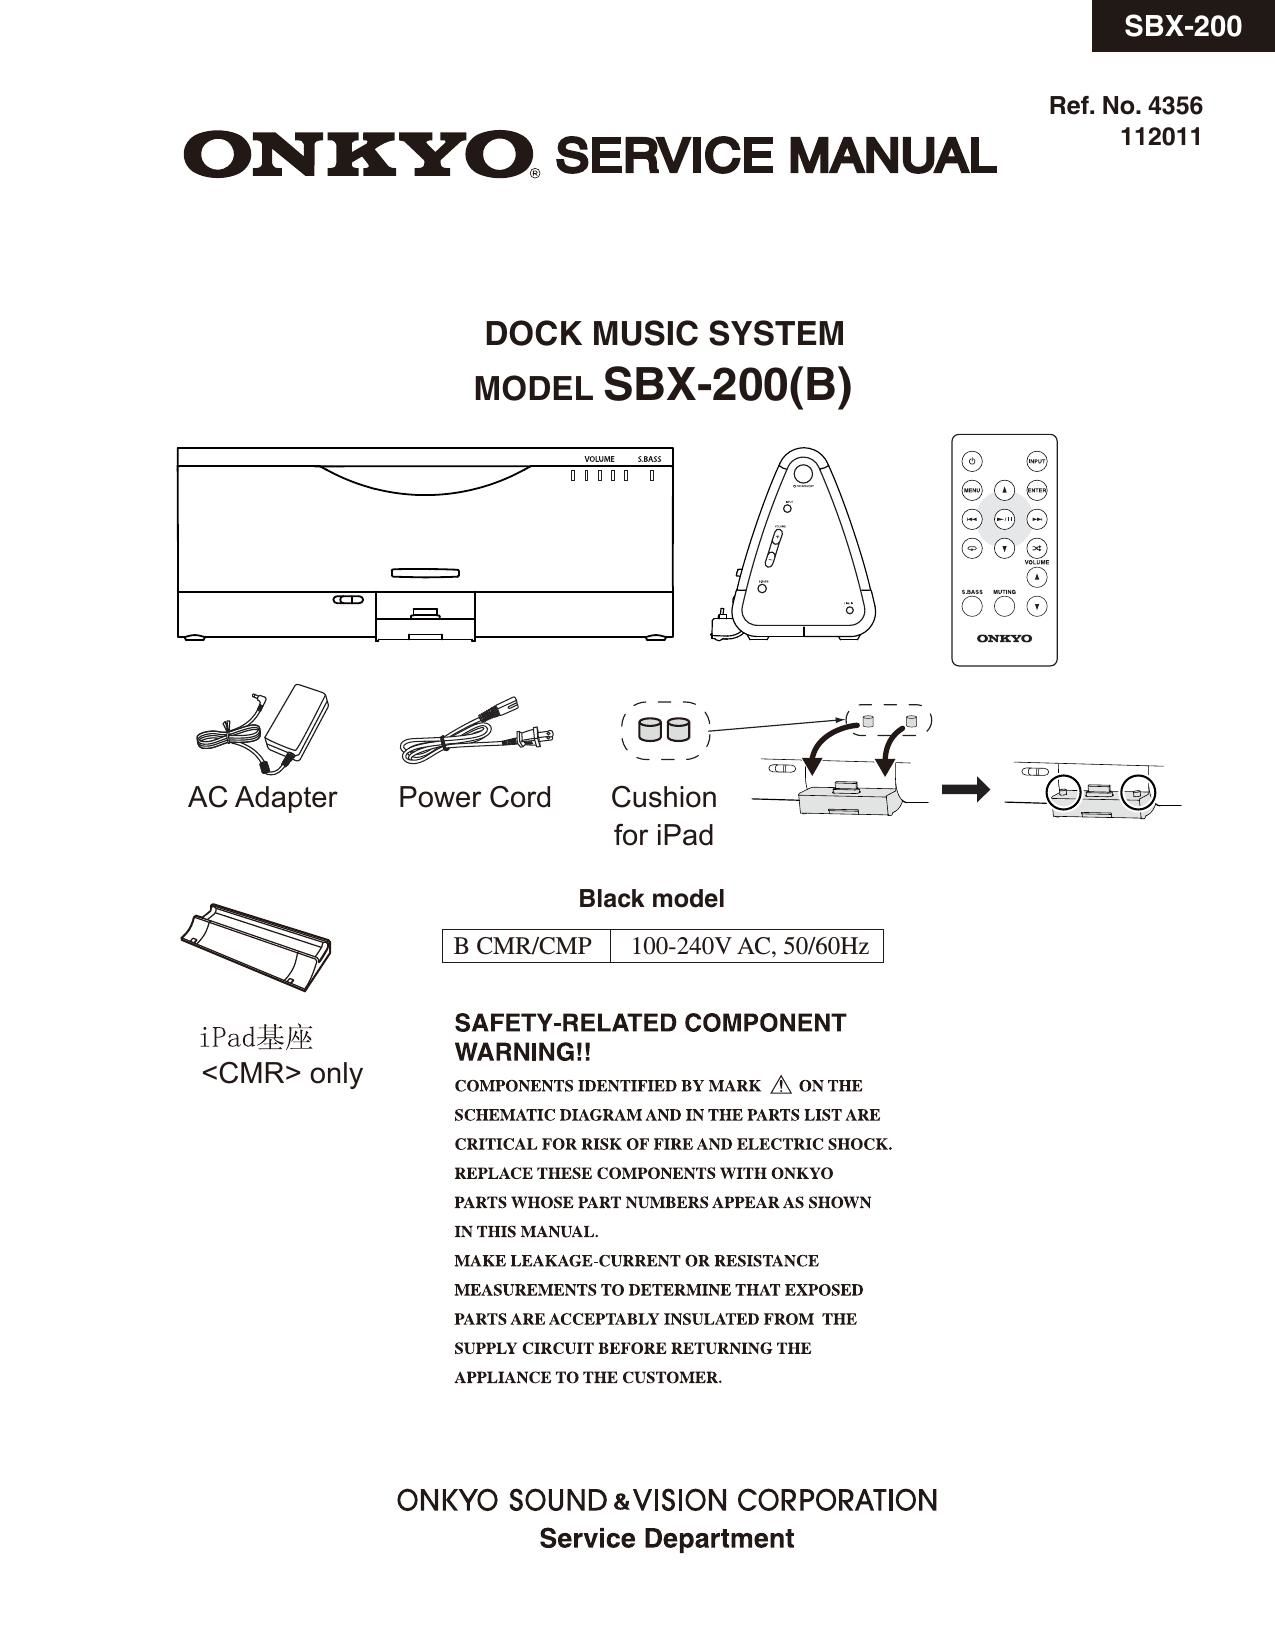 Onkyo SBX 200 B Service Manual